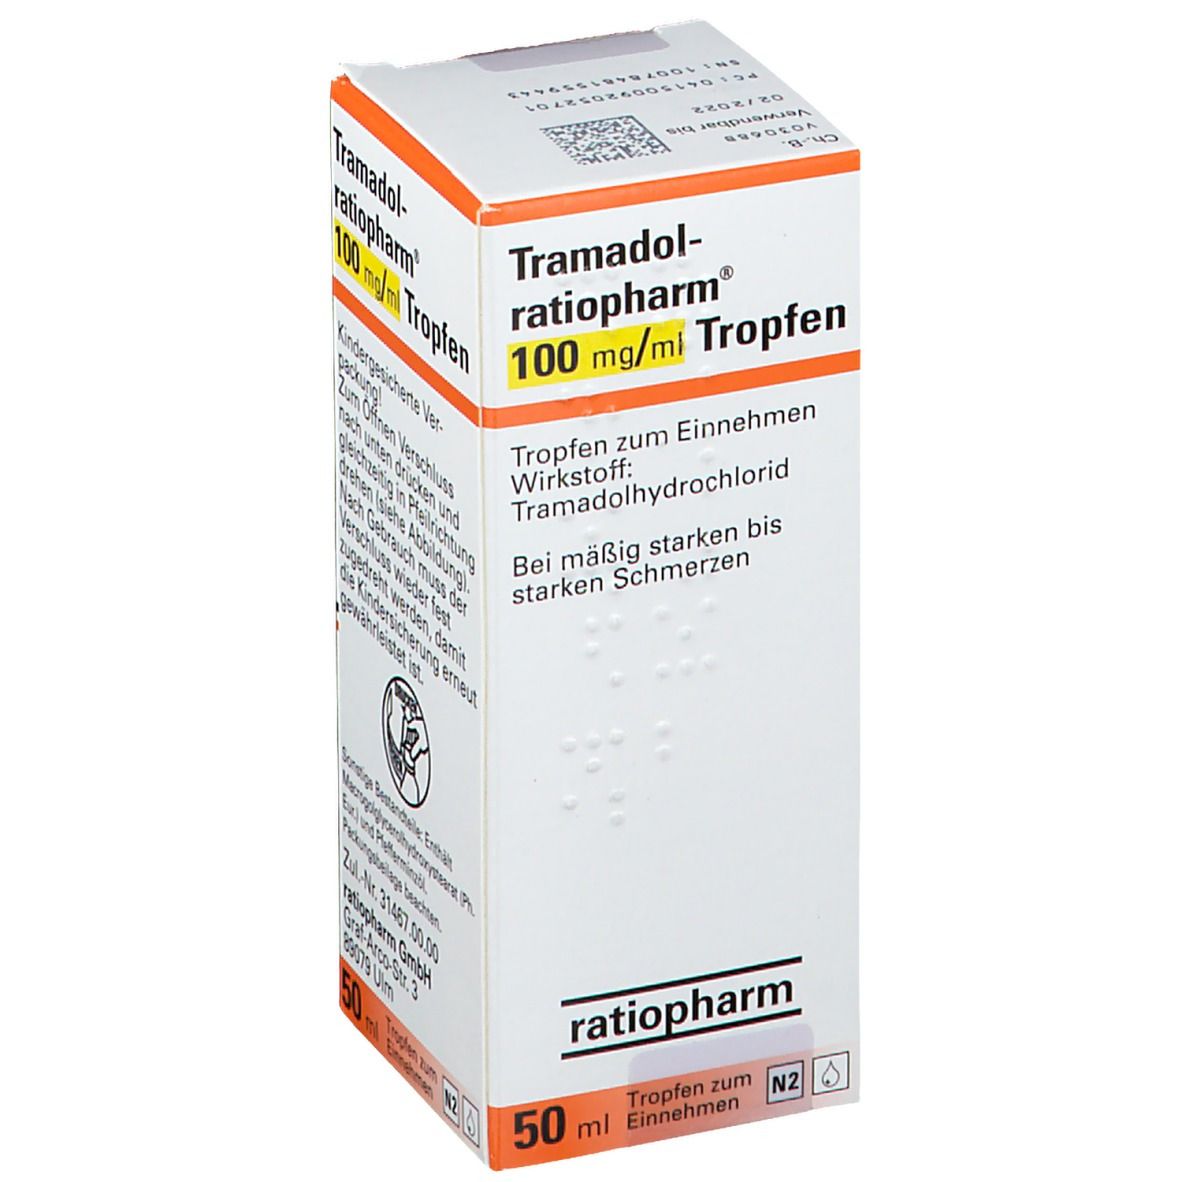 Tramadol-ratiopharm® 100 mg/ml Tropfen